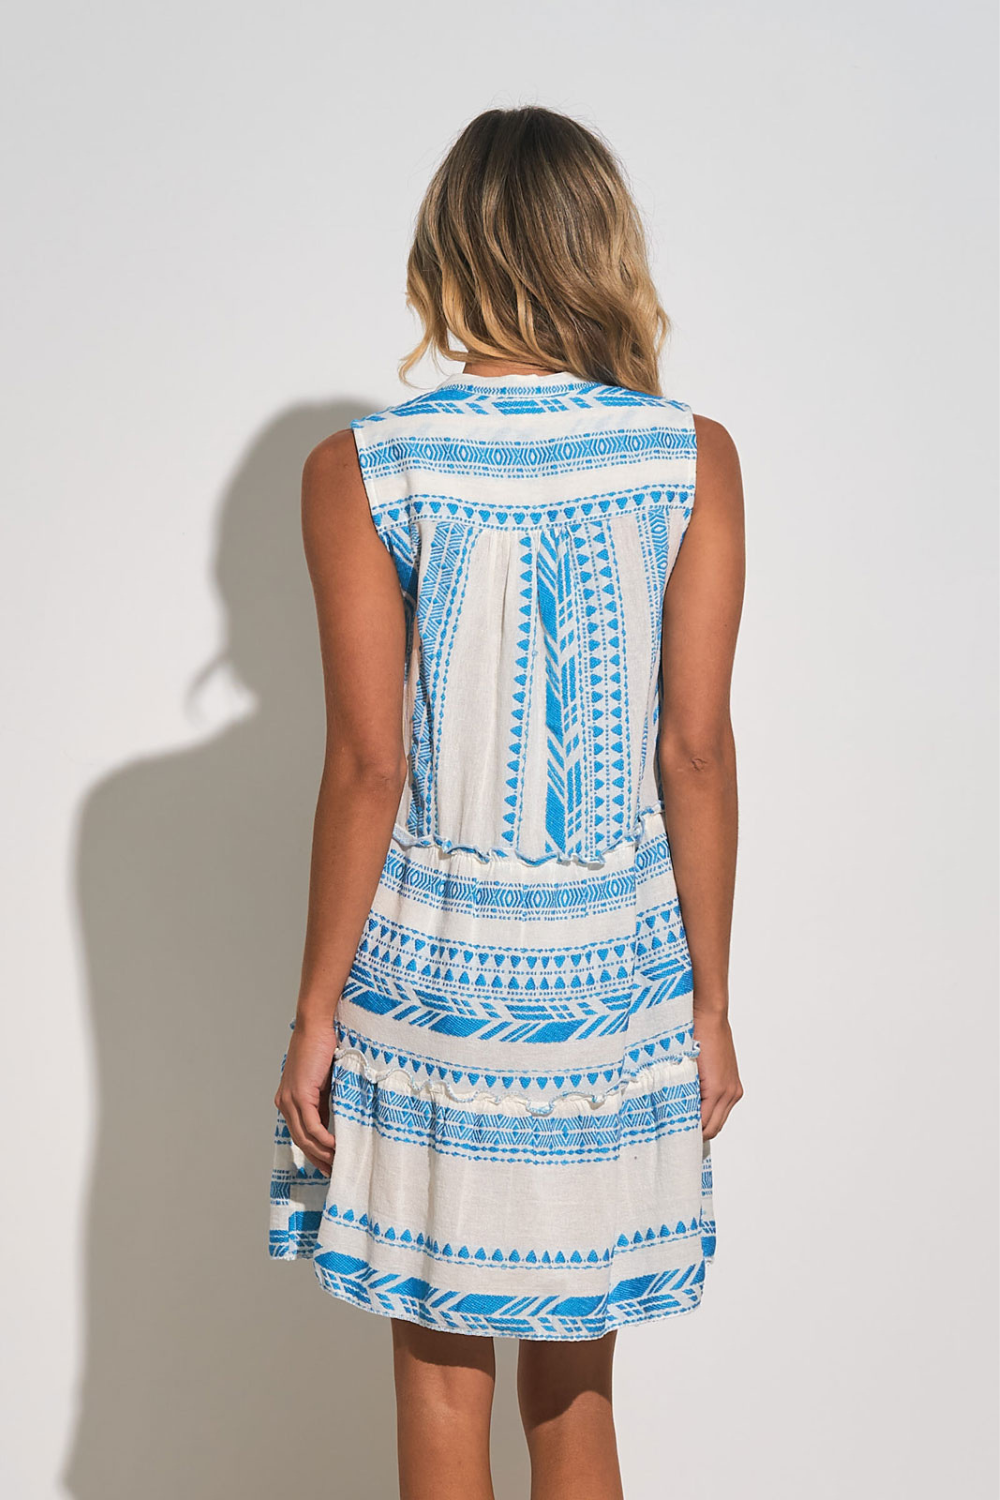 Elan Kenna A-Line Dress - White & Blue